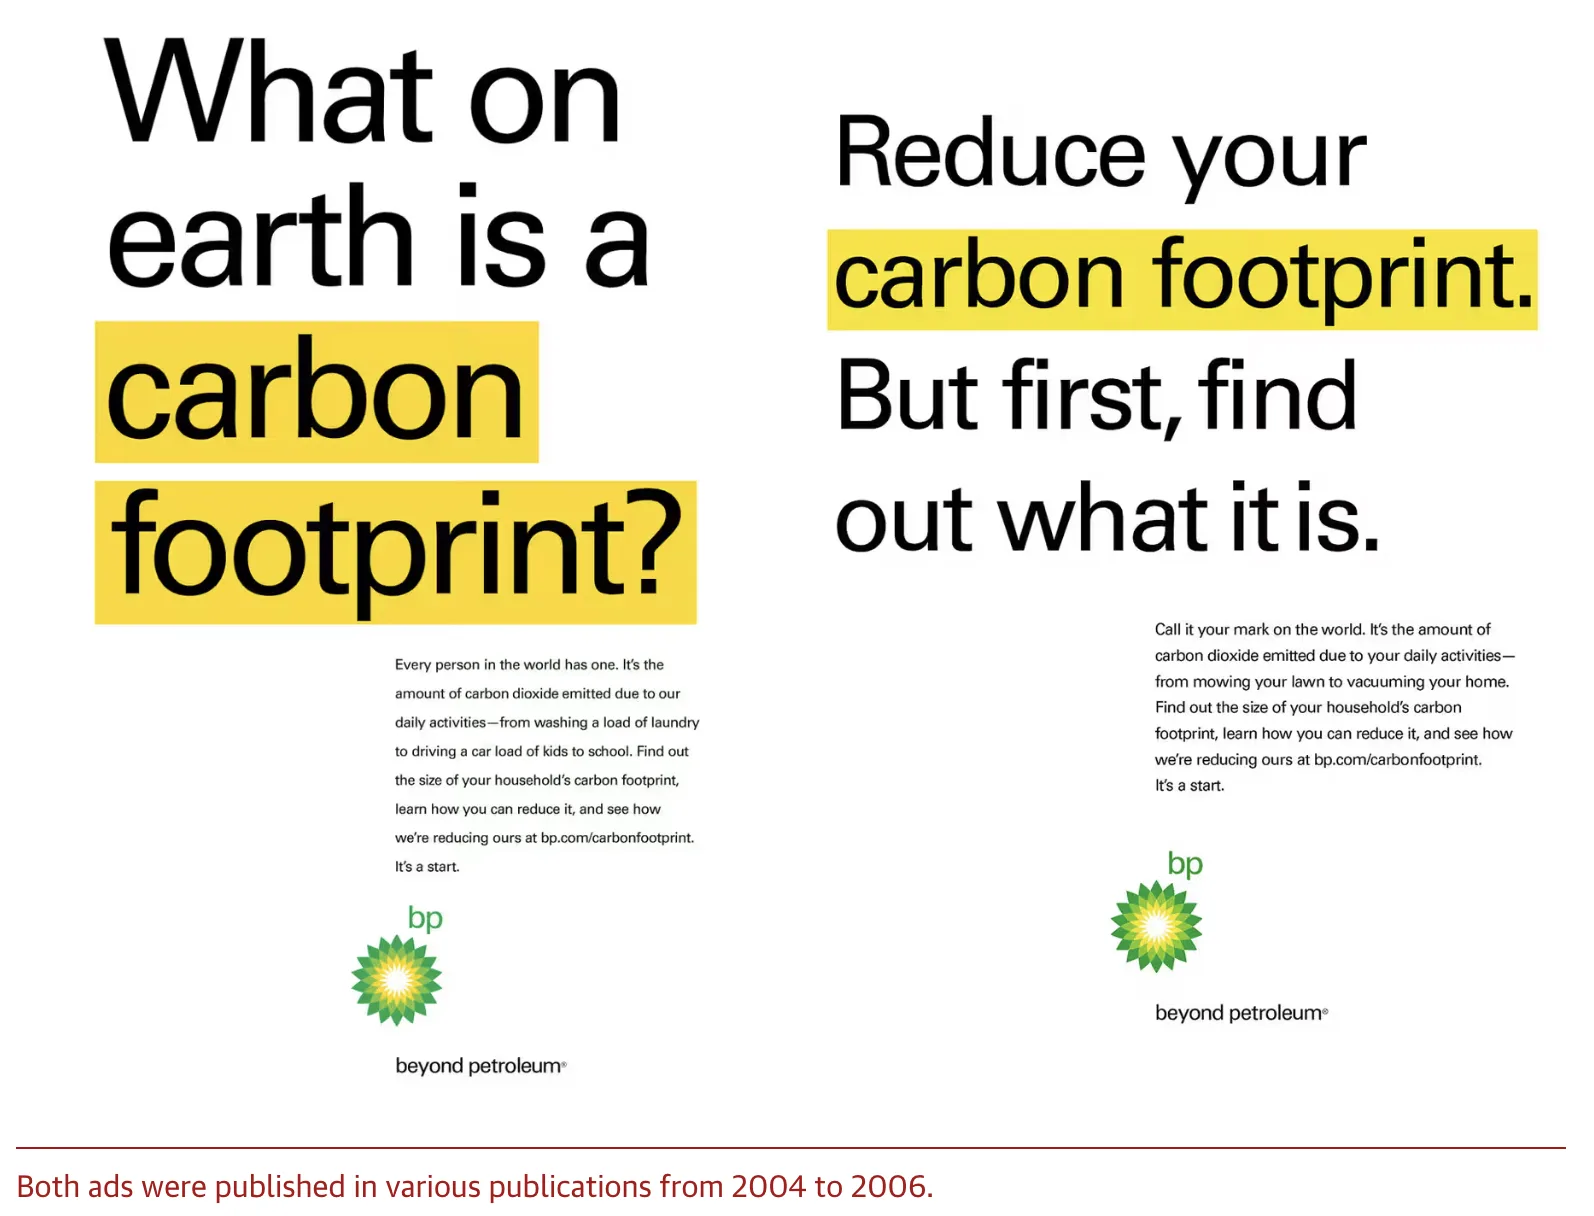 BP Carbon Footprint Ads_The Guardian